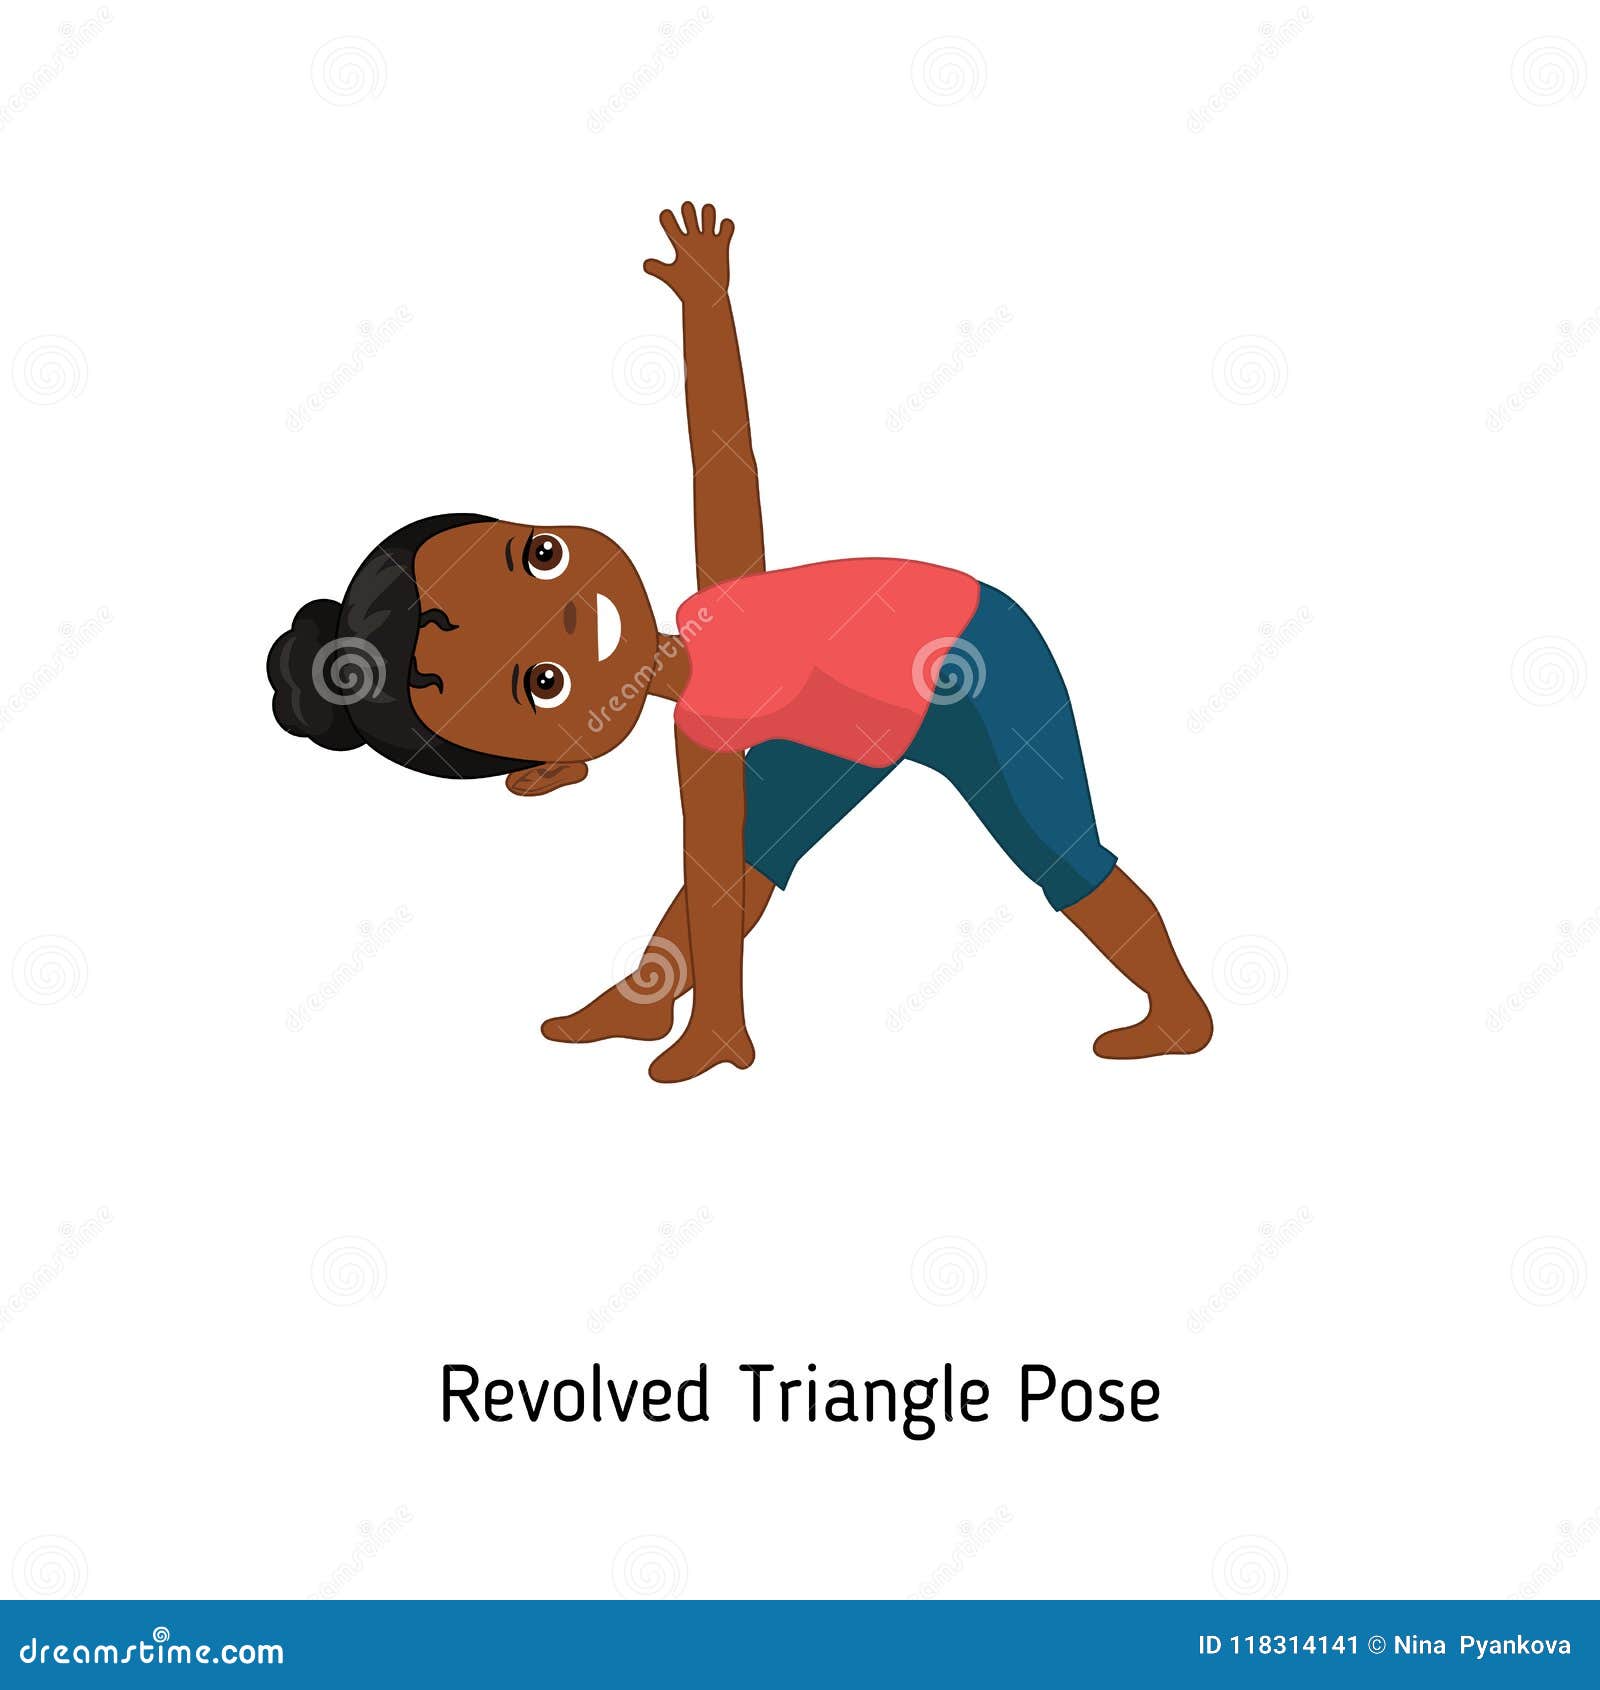 Parivrtta Trikonasana or Revolved Triangle Pose